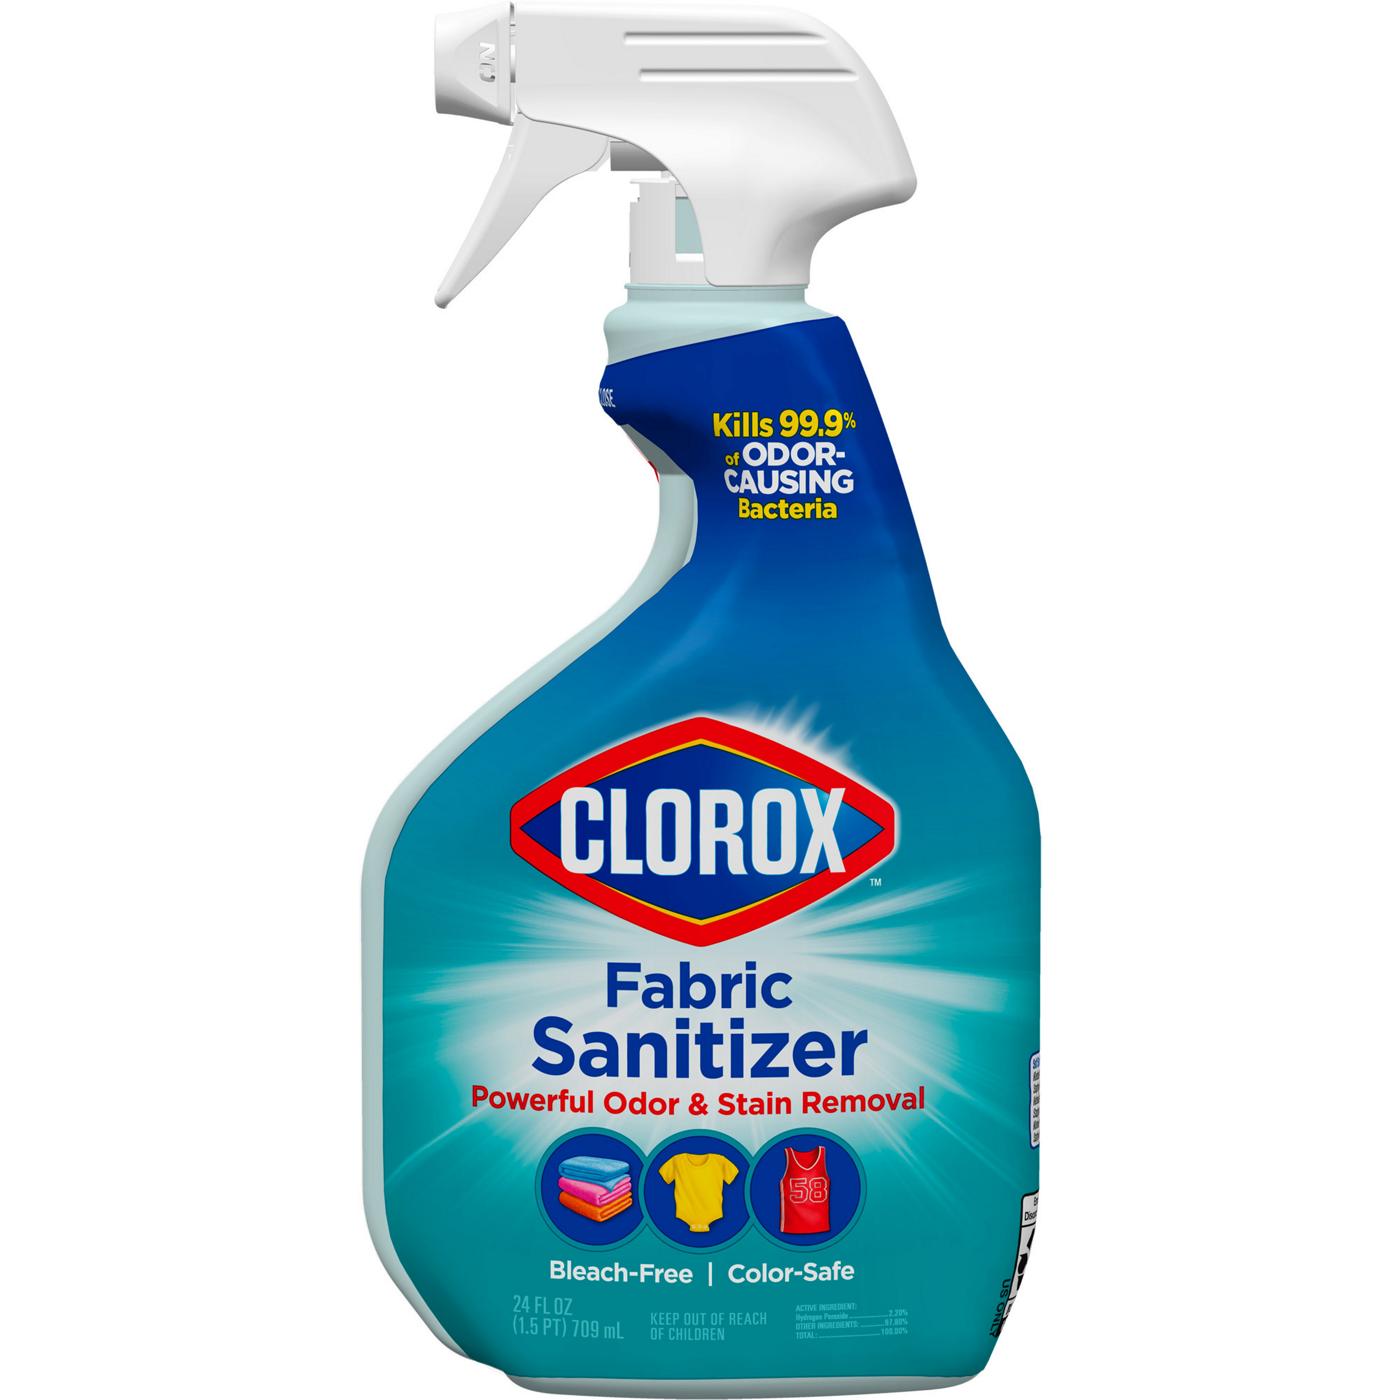 Clorox Fabric Sanitizer Spray; image 1 of 7